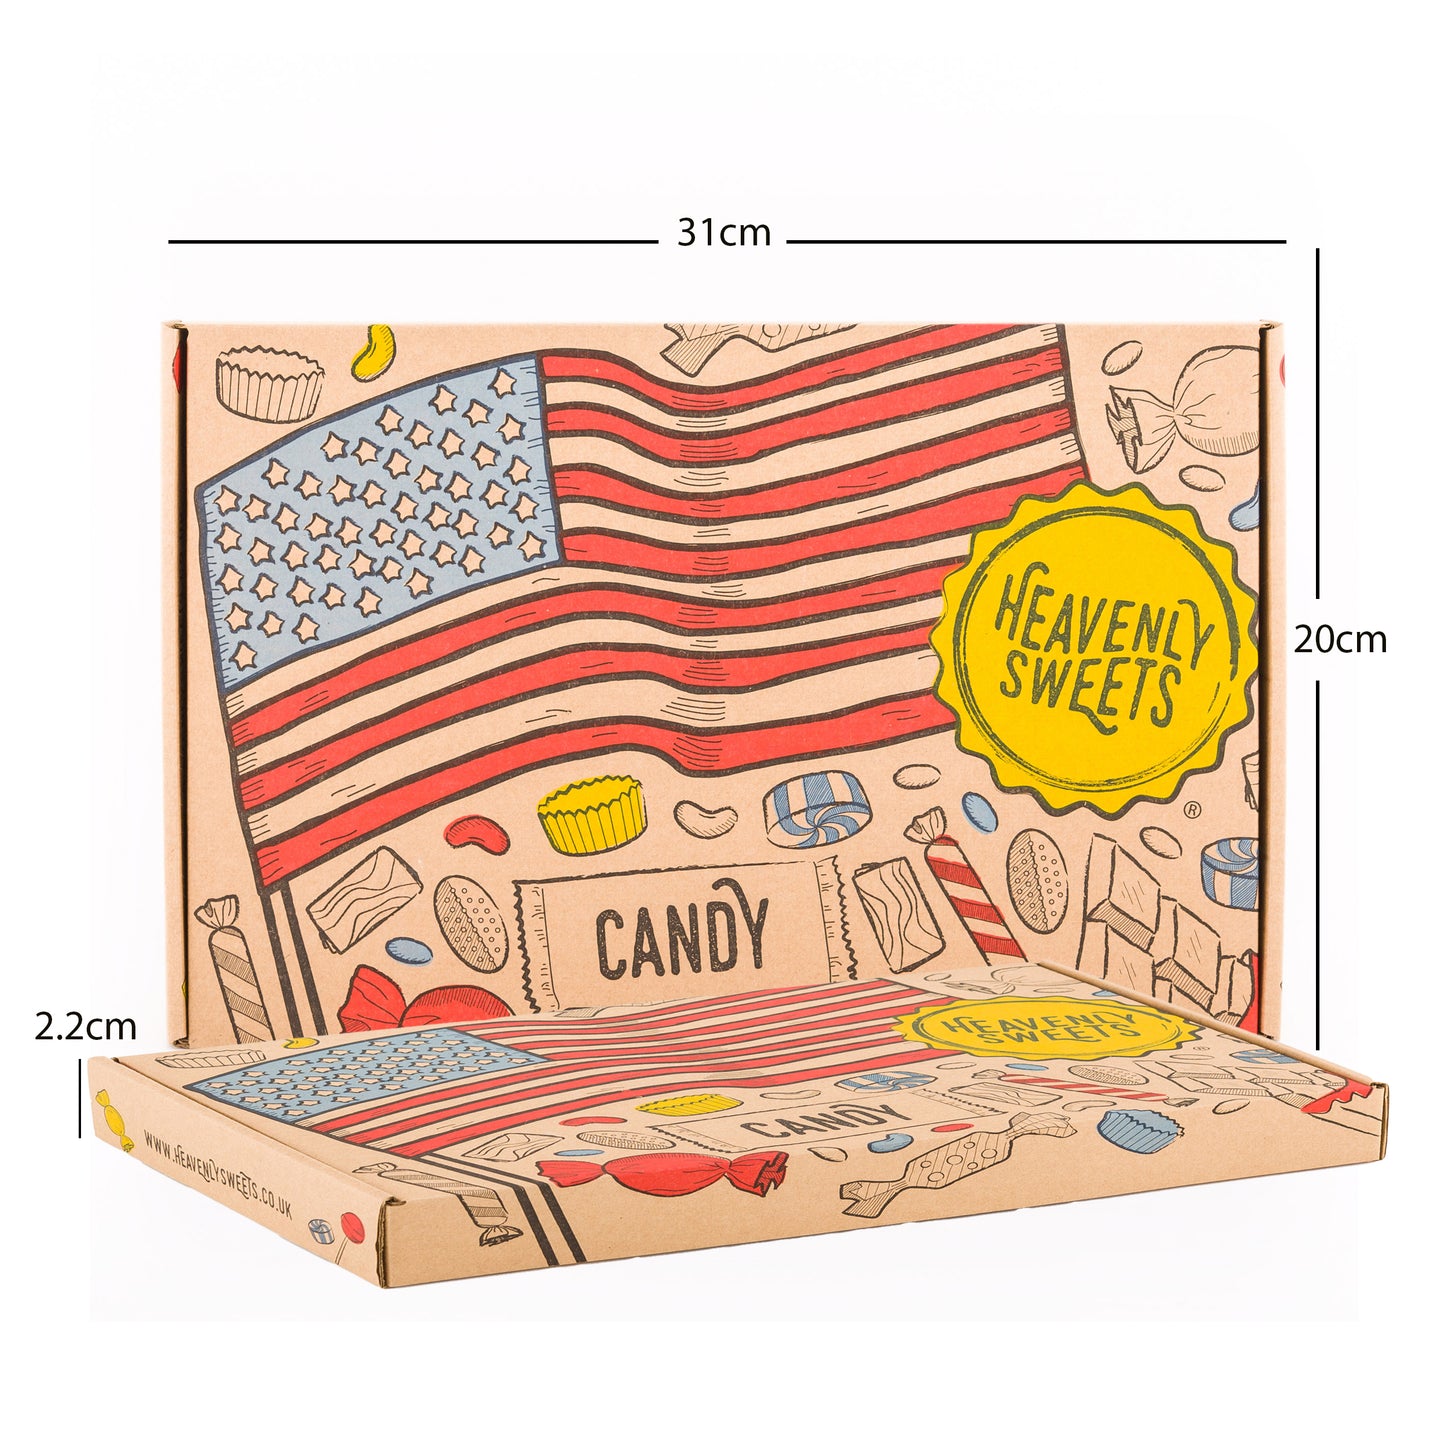 Medium American Candy Chocolate Sweets Gift Box Hamper